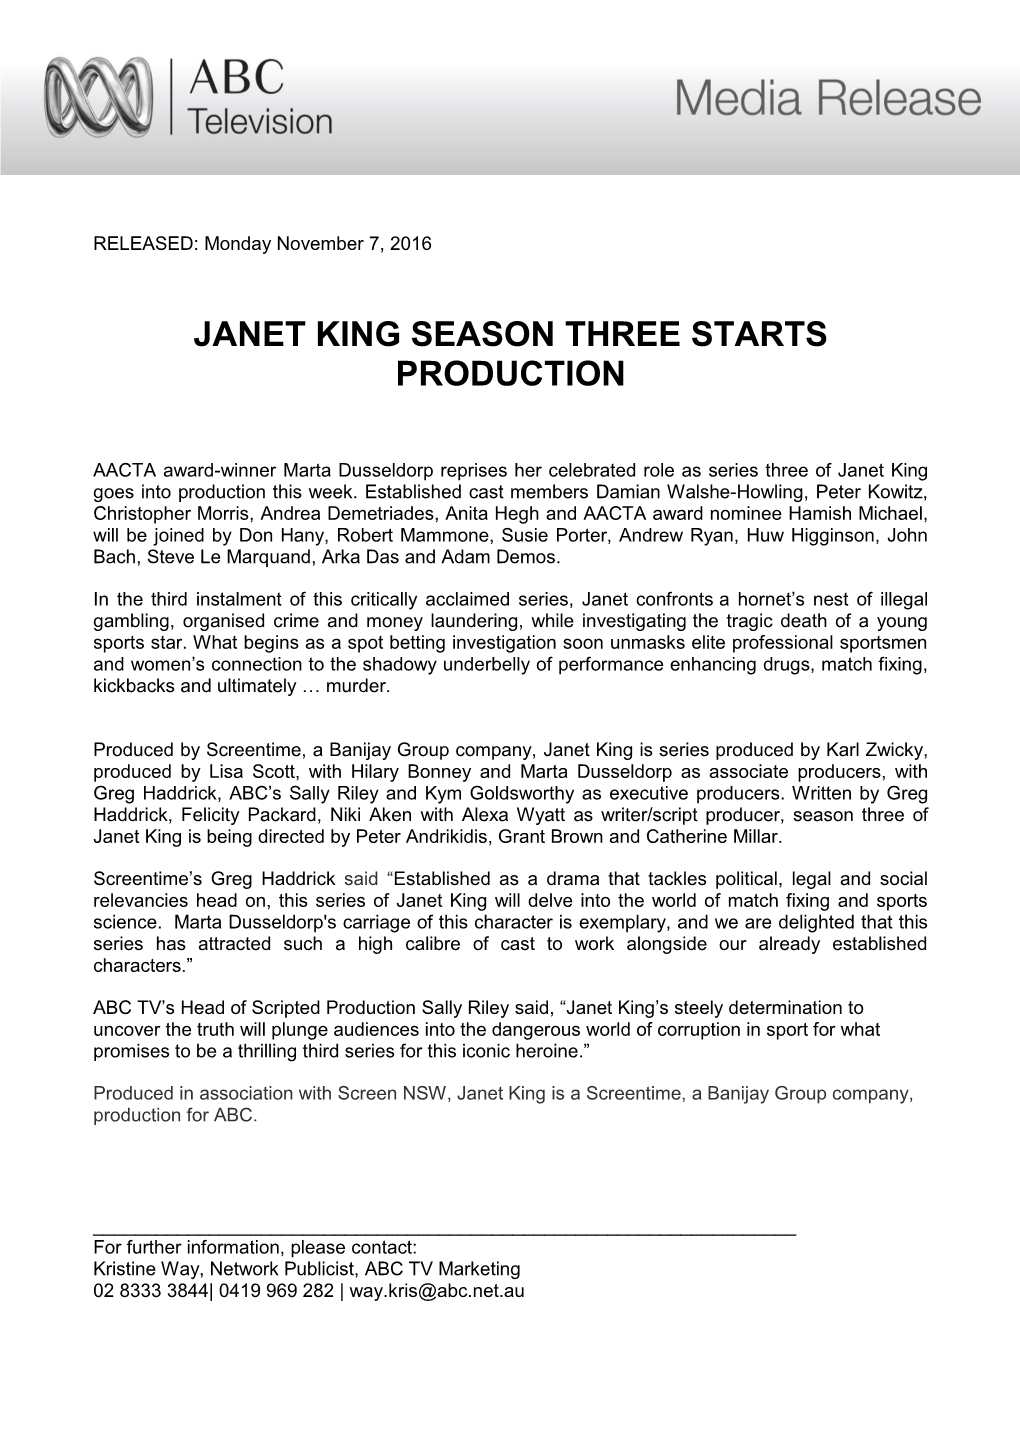 Janet King Season Three Starts Production